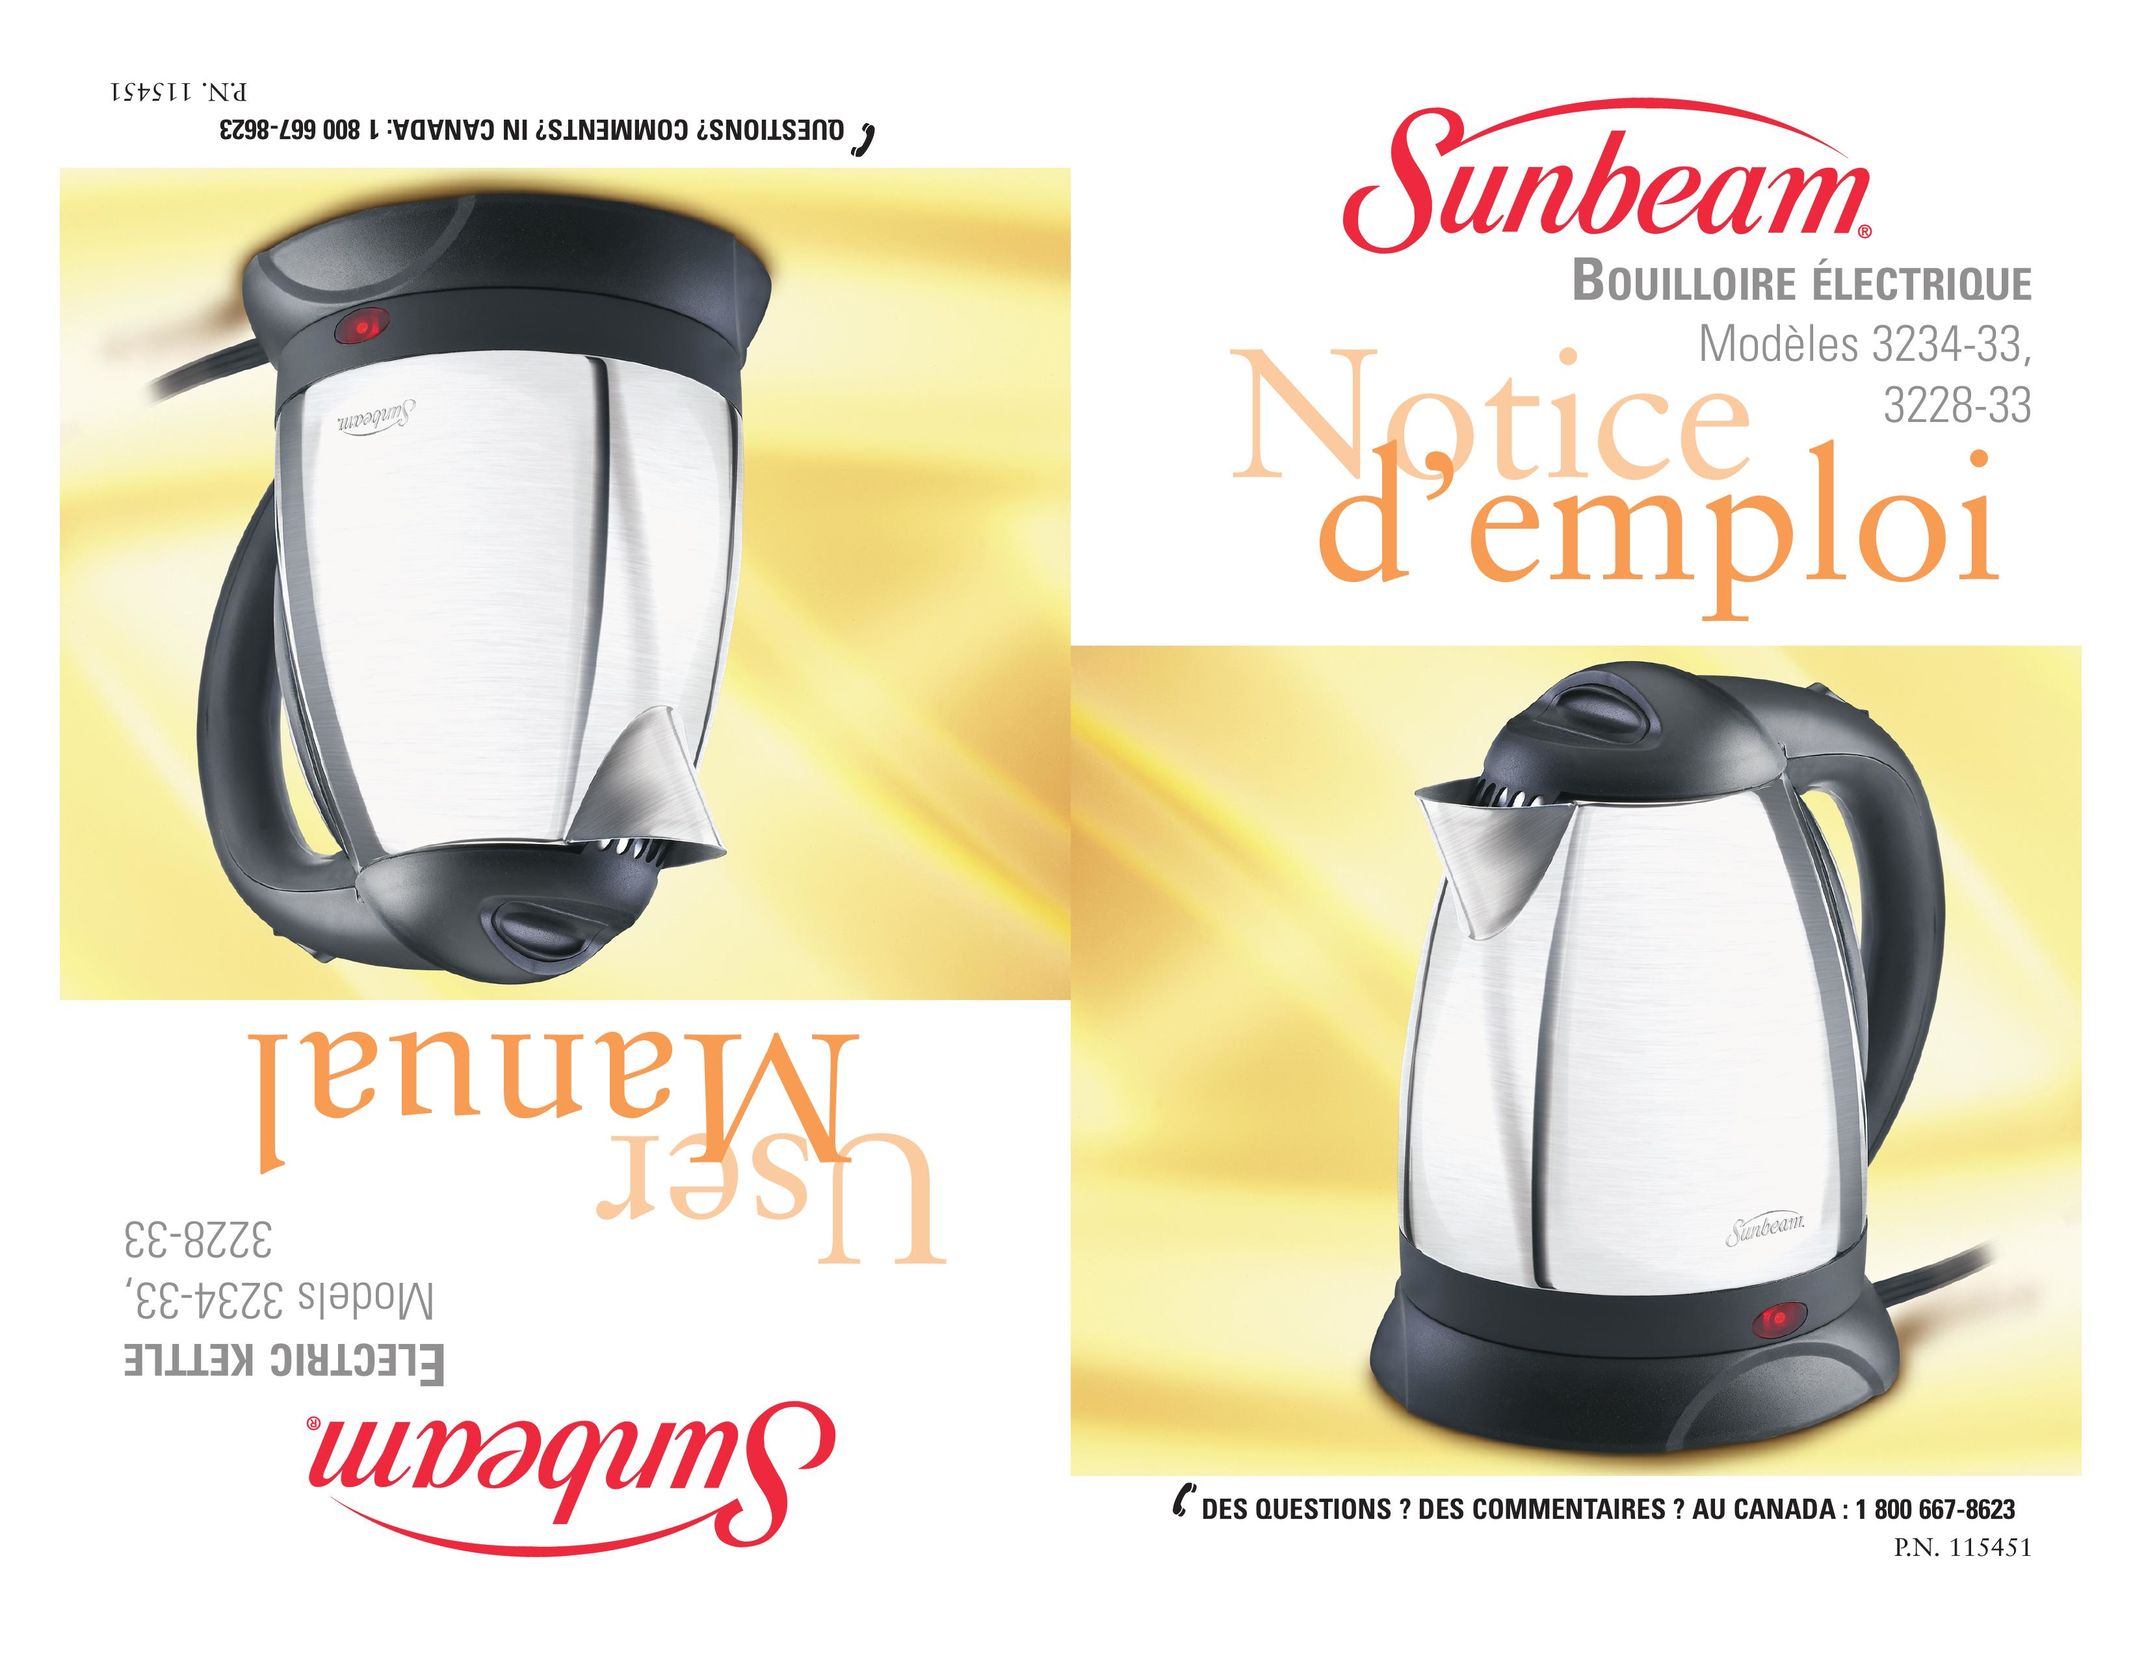 Sunbeam 3234-33 Hot Beverage Maker User Manual